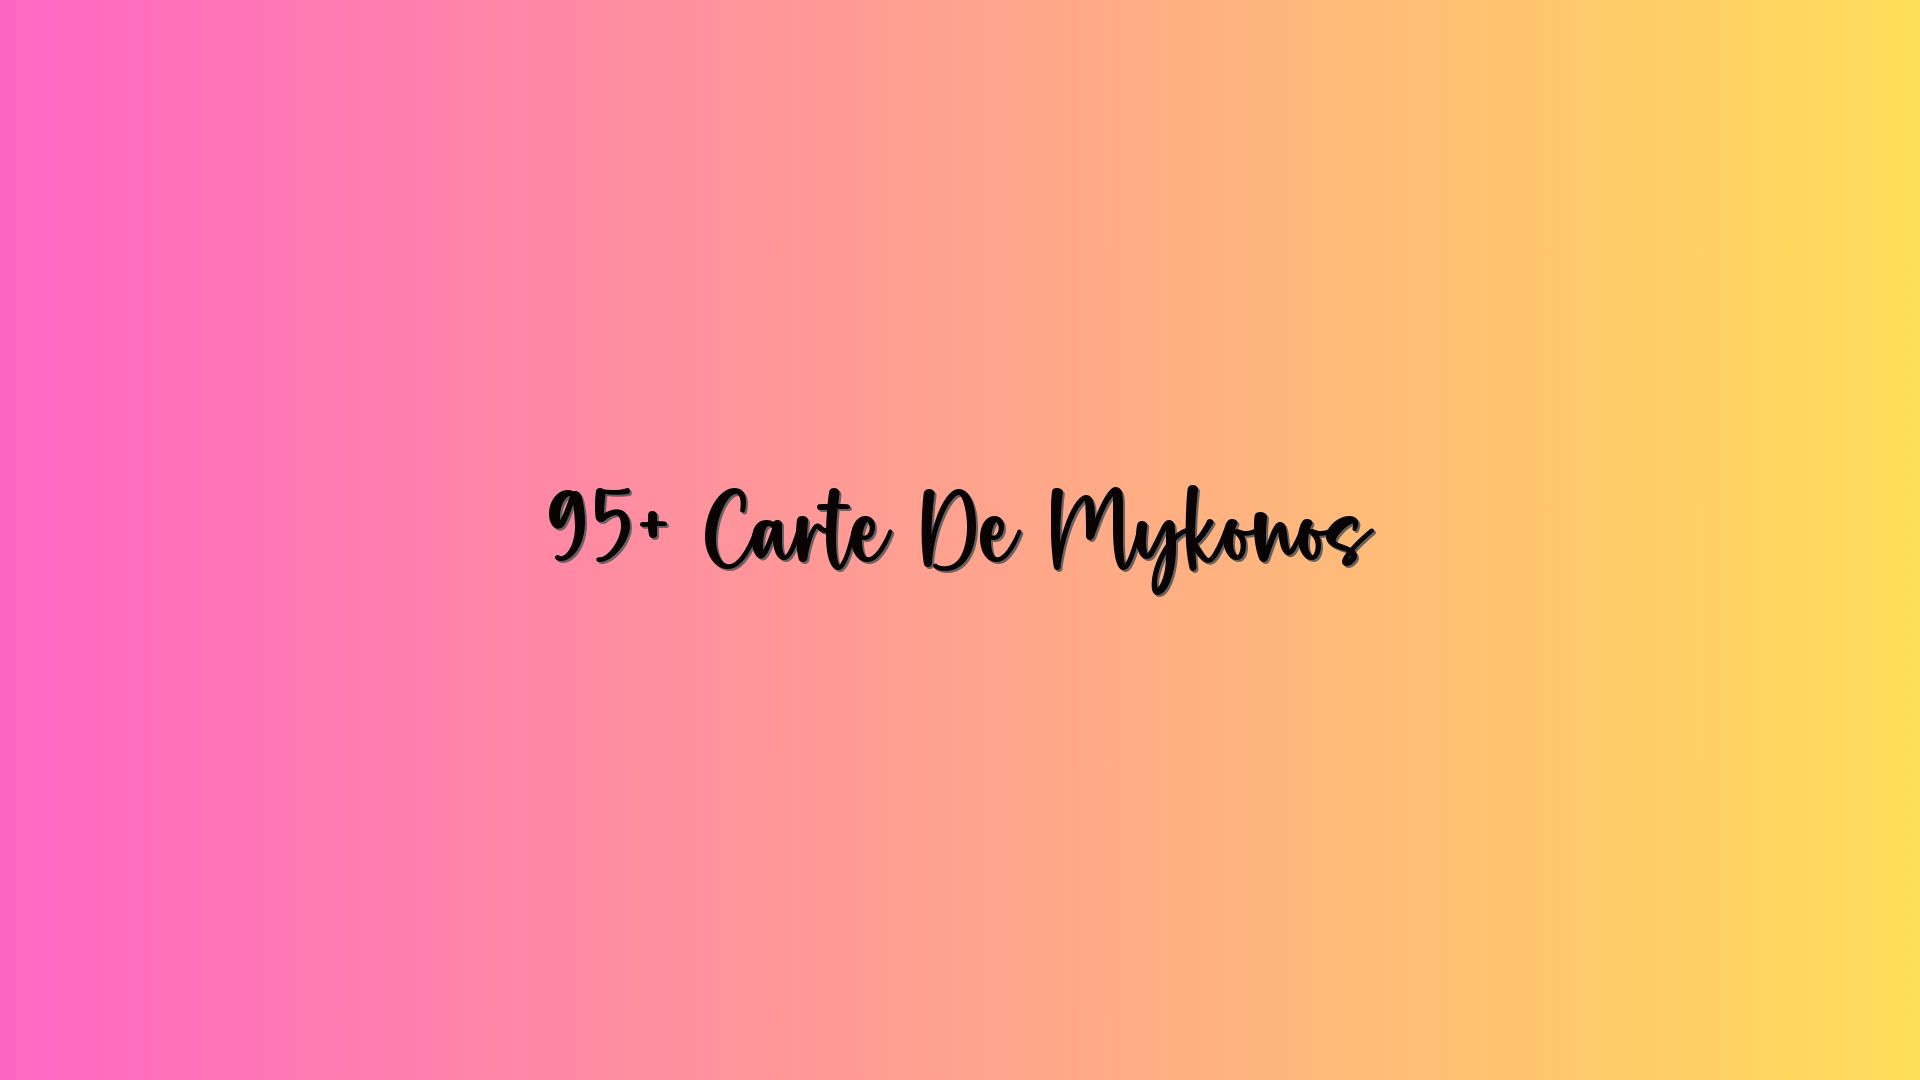 95+ Carte De Mykonos